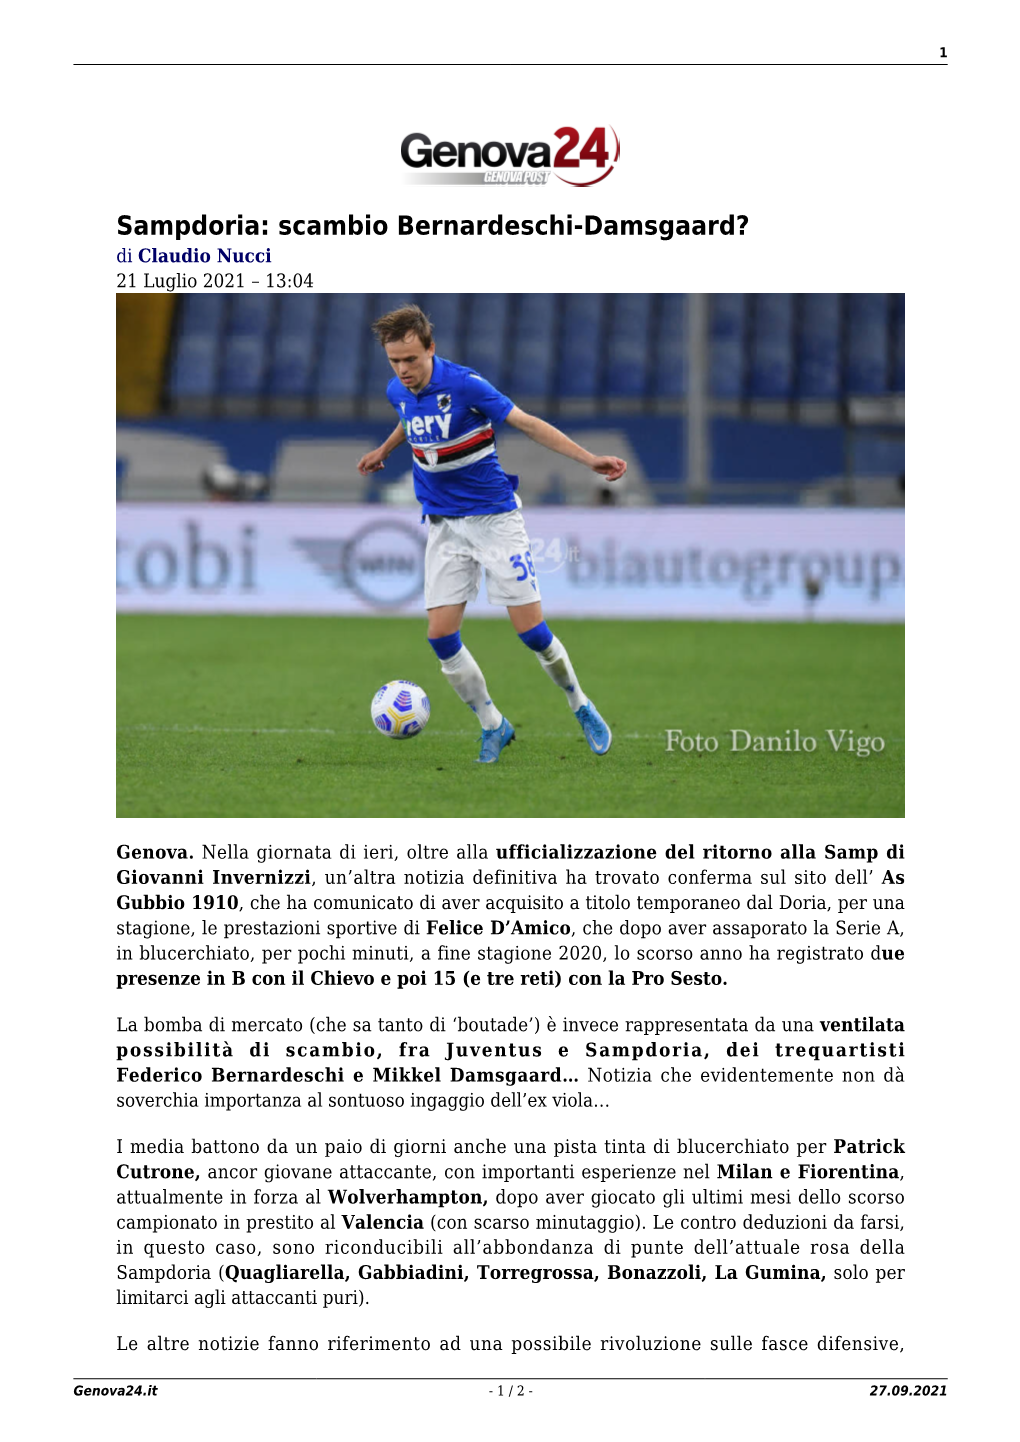 Sampdoria: Scambio Bernardeschi-Damsgaard? Di Claudio Nucci 21 Luglio 2021 – 13:04